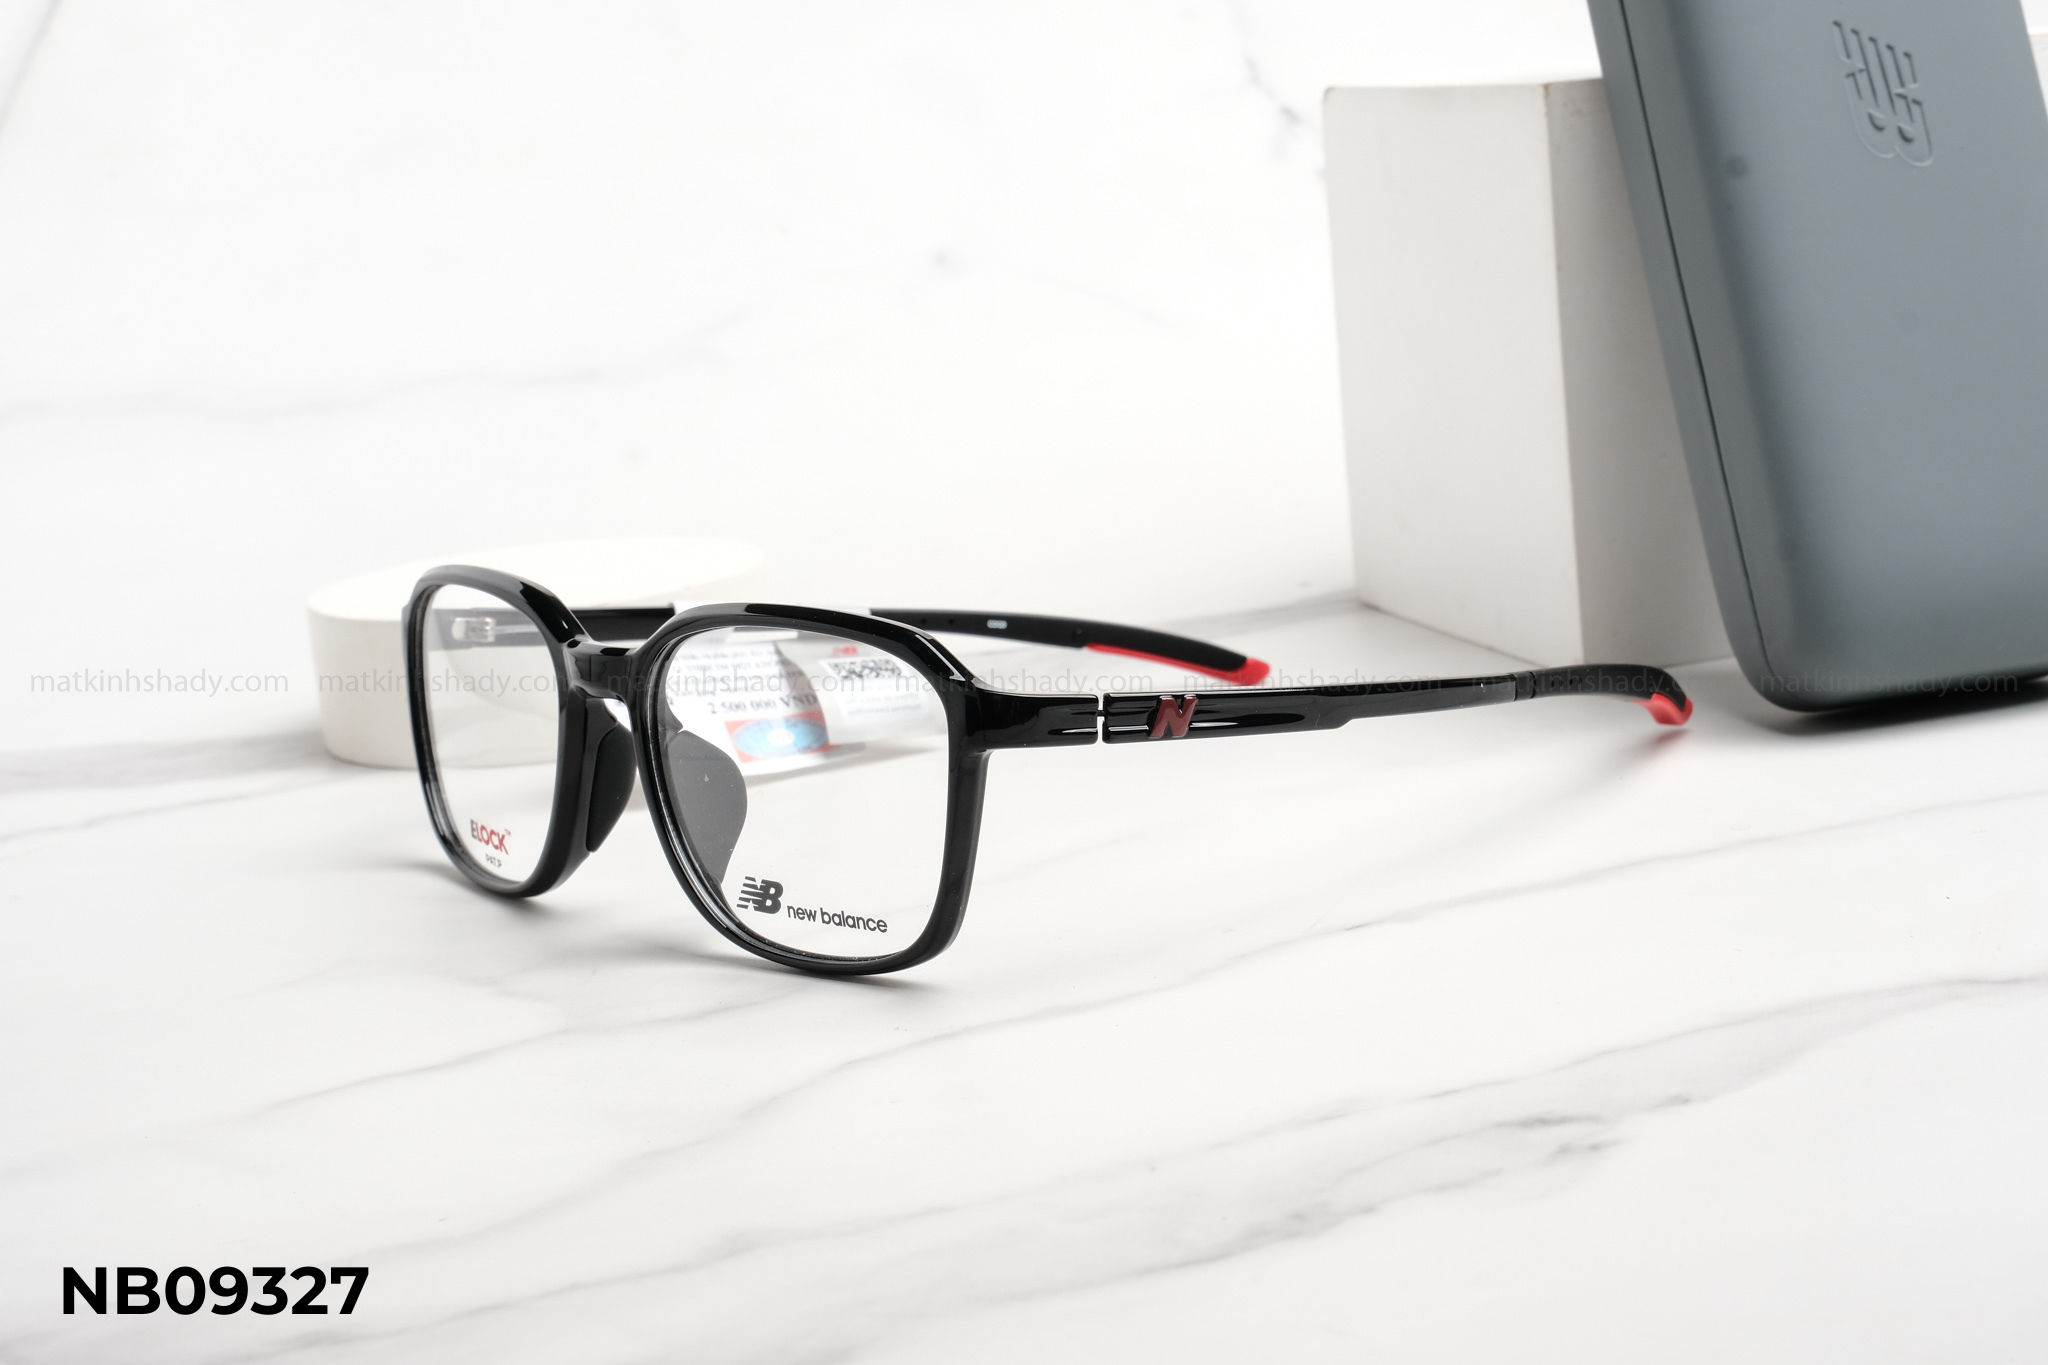  New Balance Eyewear - Glasses - NB09327 